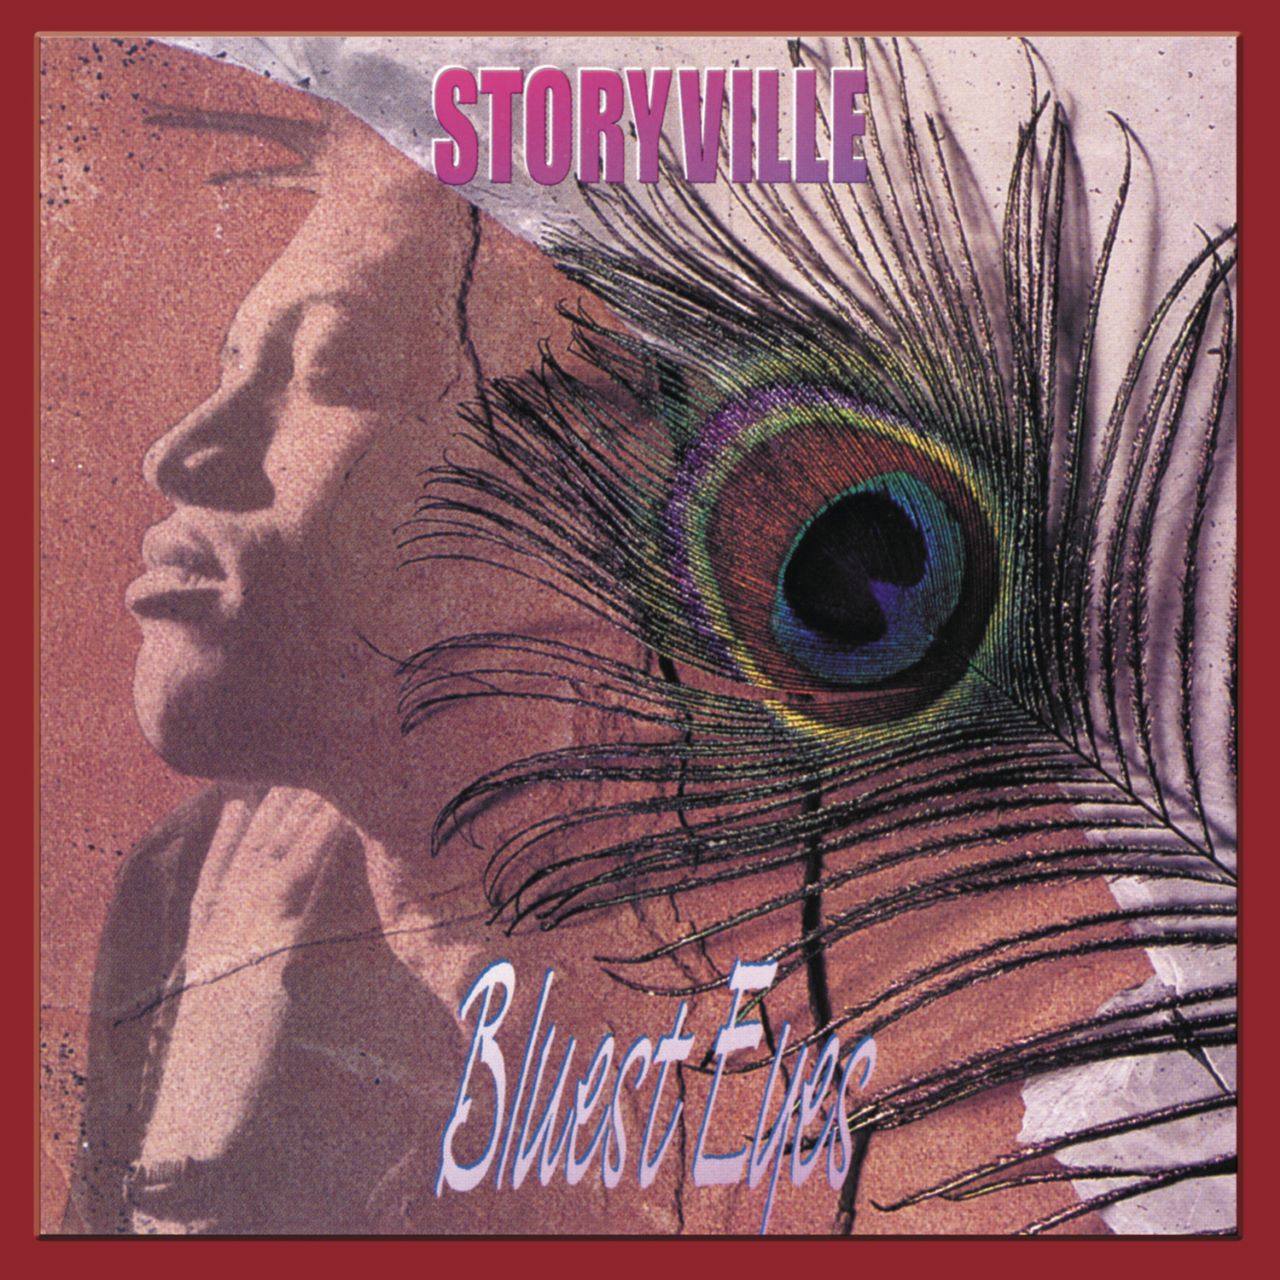 Storyville – Bluest Eyes cover album